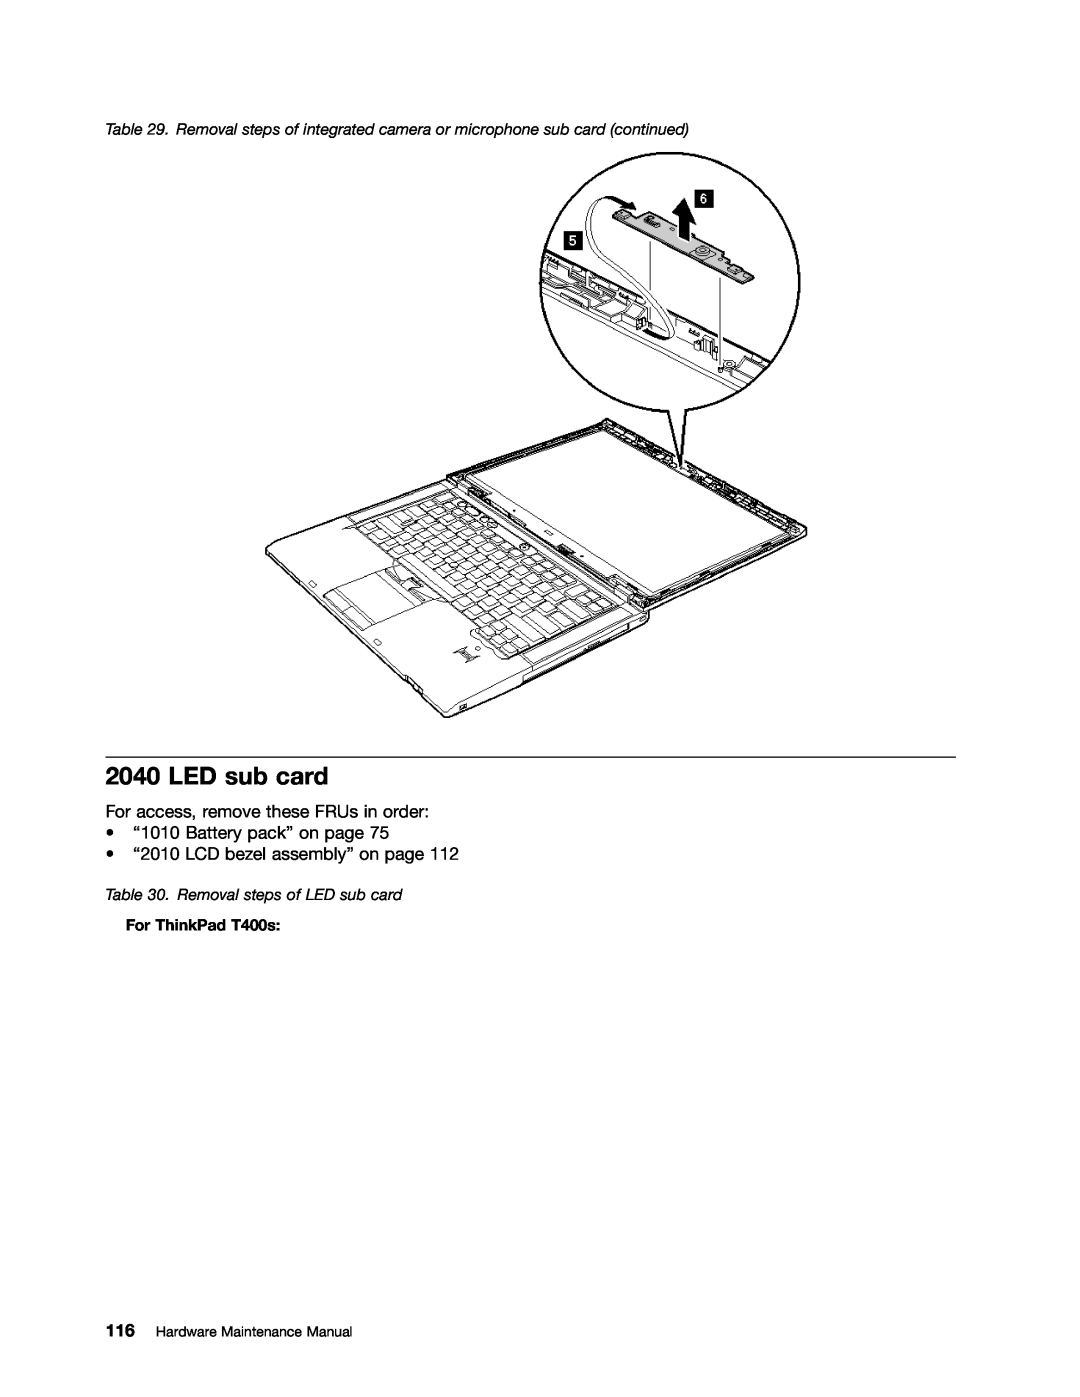 IBM T410SI, T400S manual Removal steps of LED sub card, Hardware Maintenance Manual 